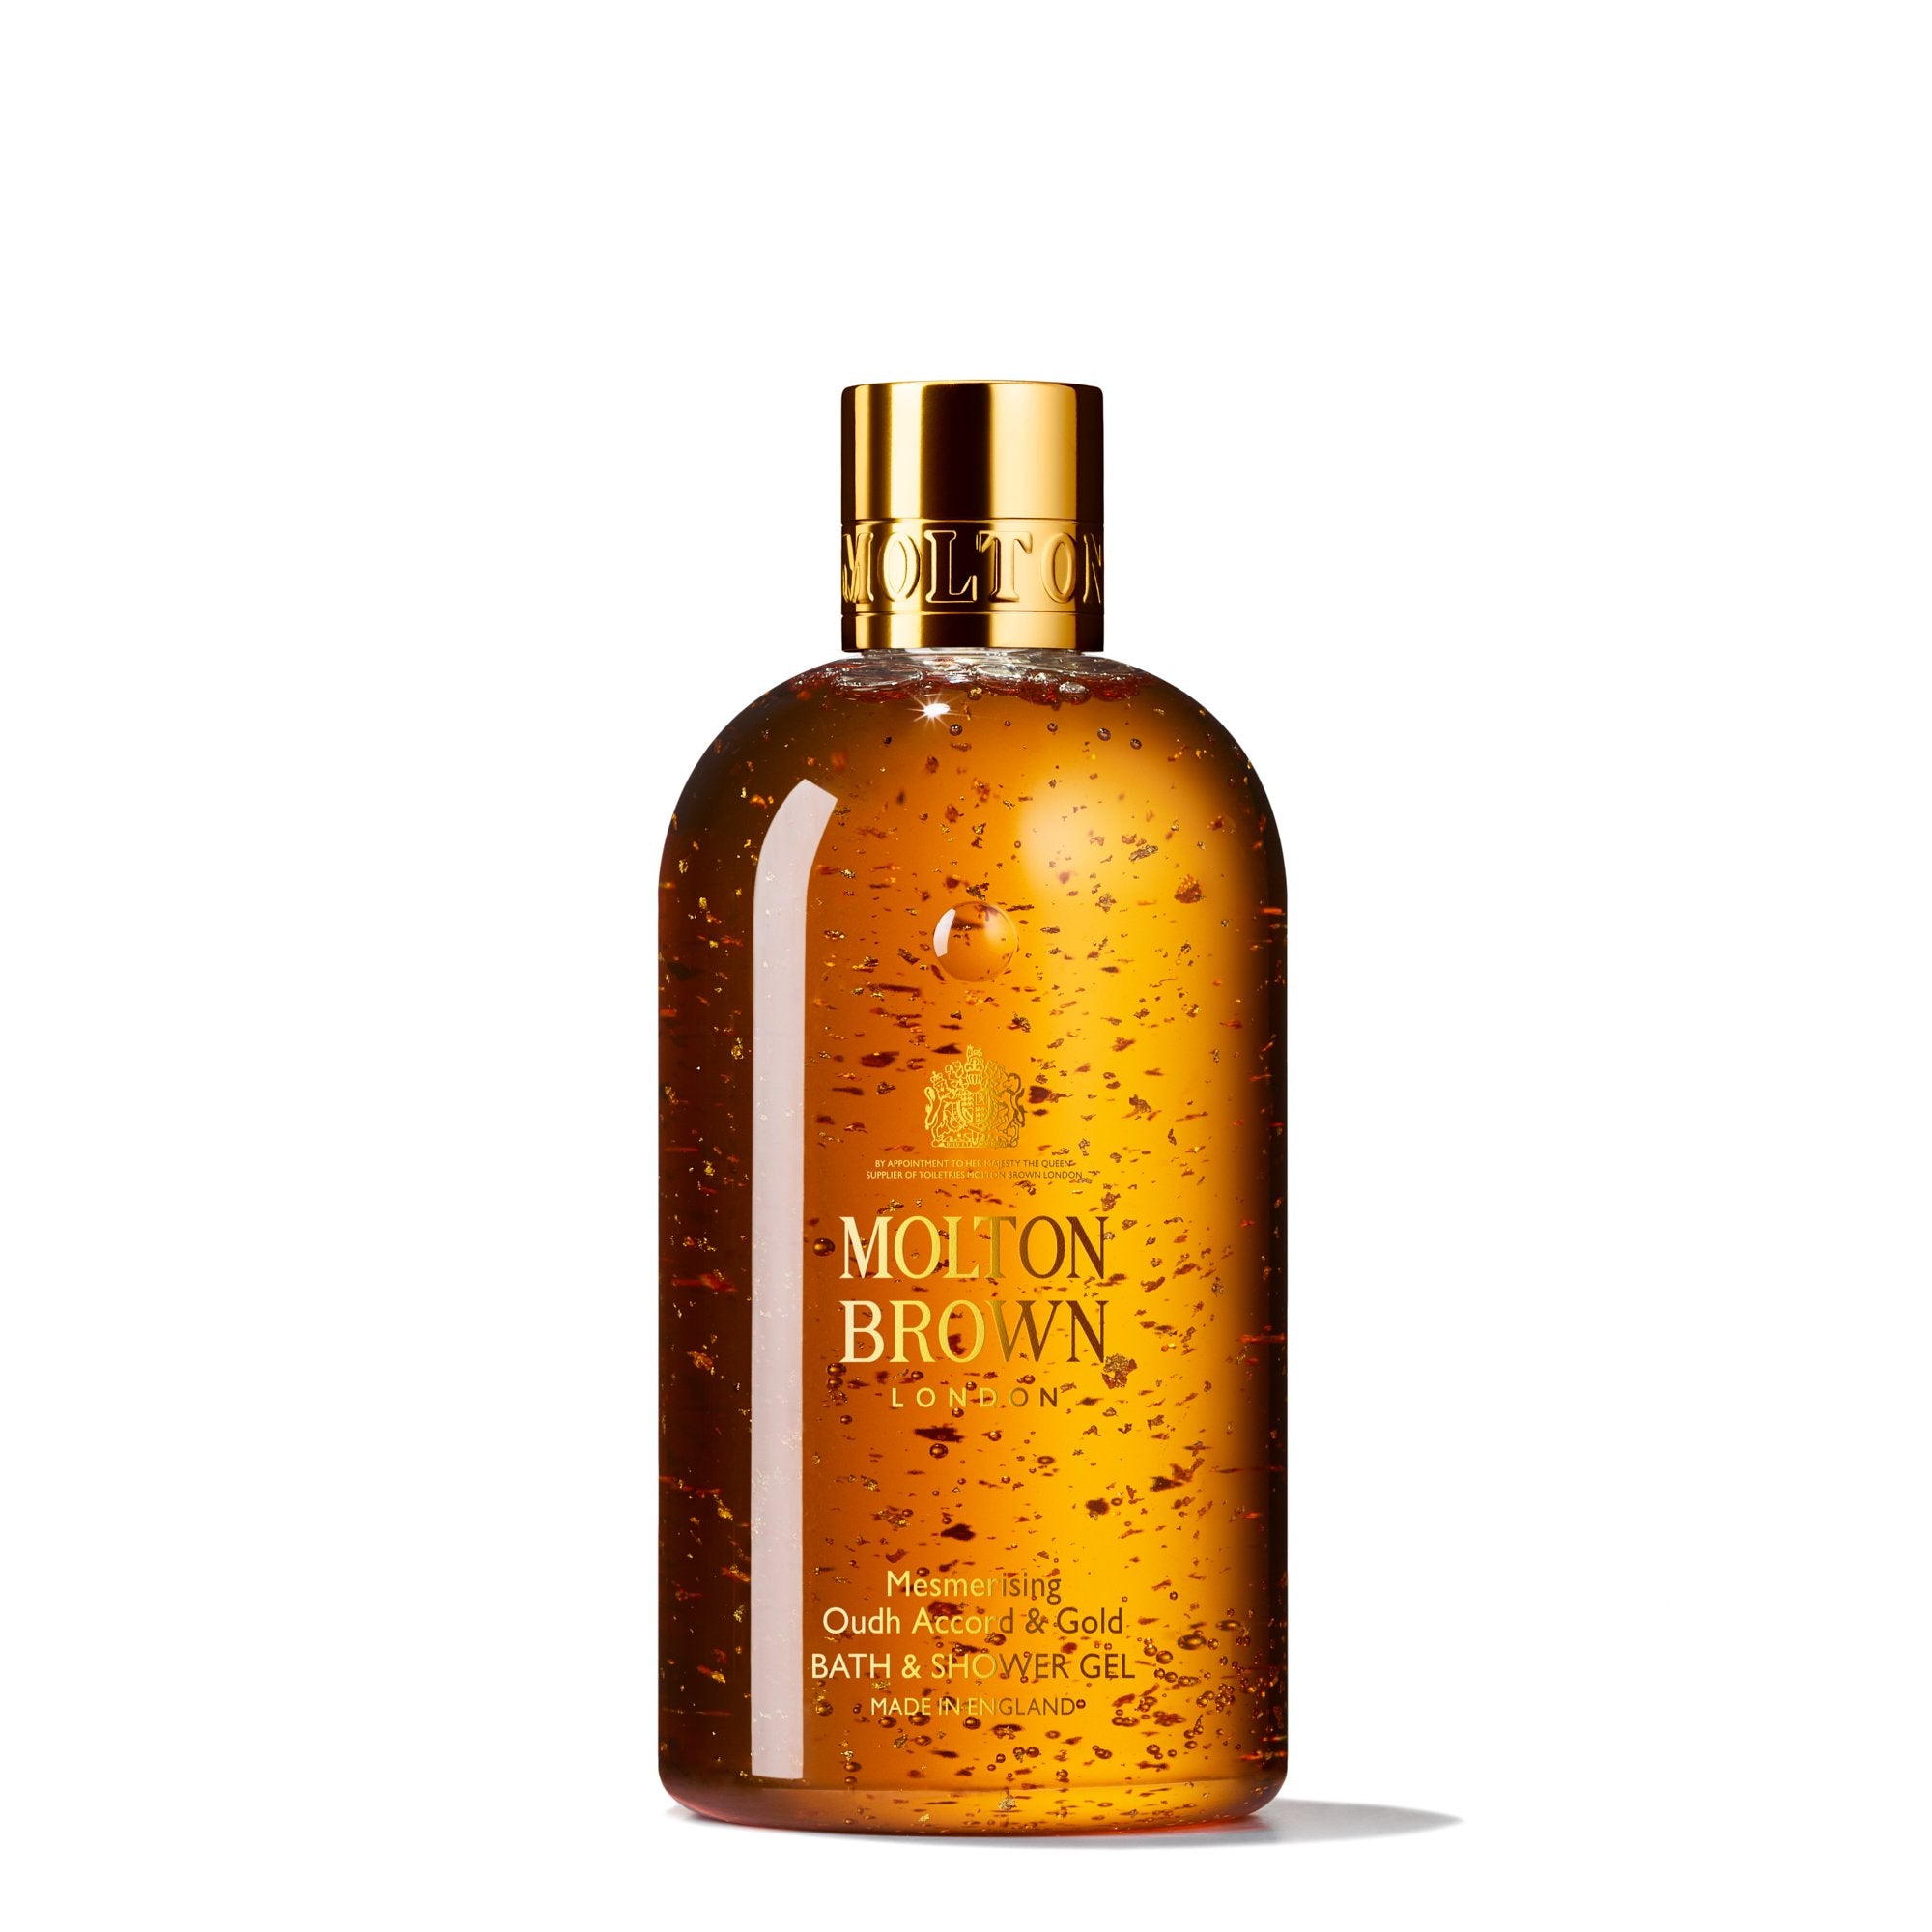 Molton Brown Mesmerising Oudh Accord & Gold Bath & Shower Gel, 300 ml